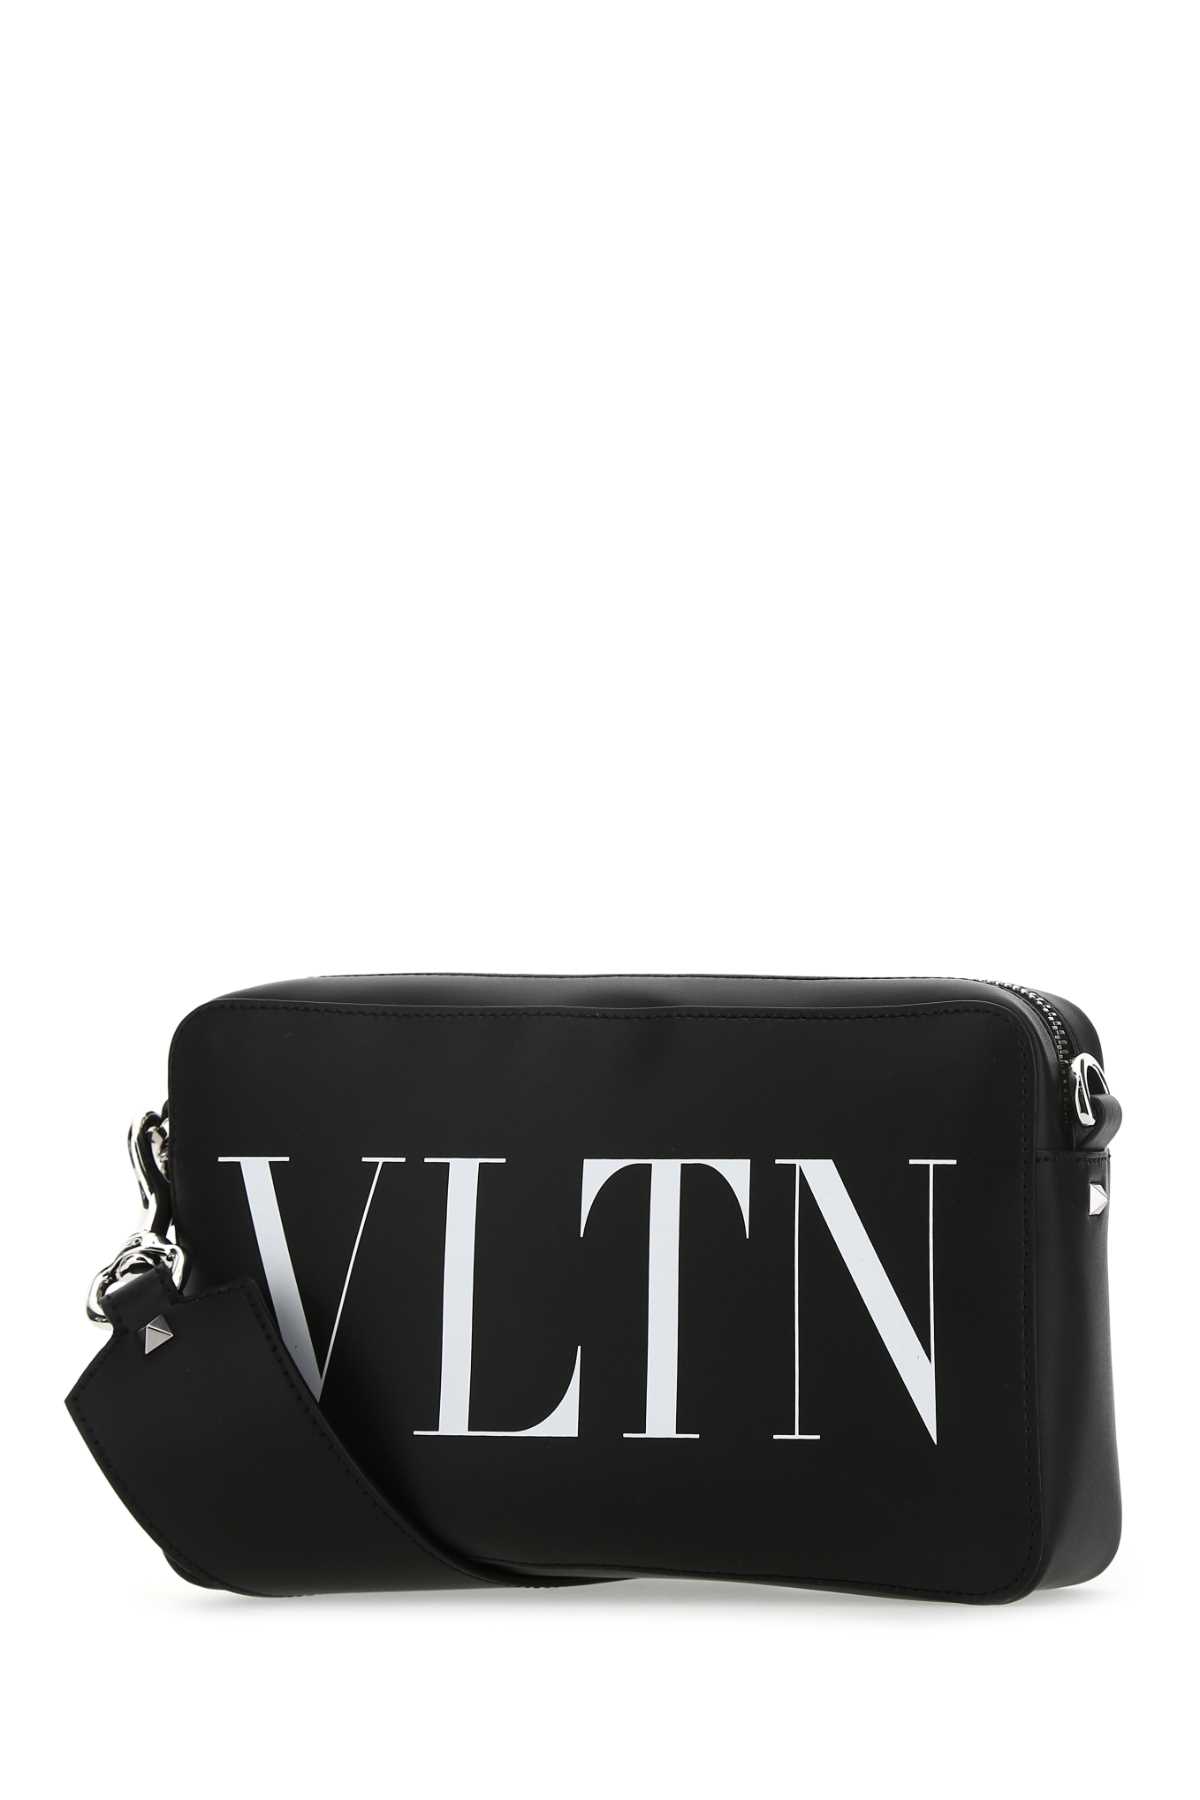 Shop Valentino Black Leather Vltn Crossbody Bag In Nerobianco